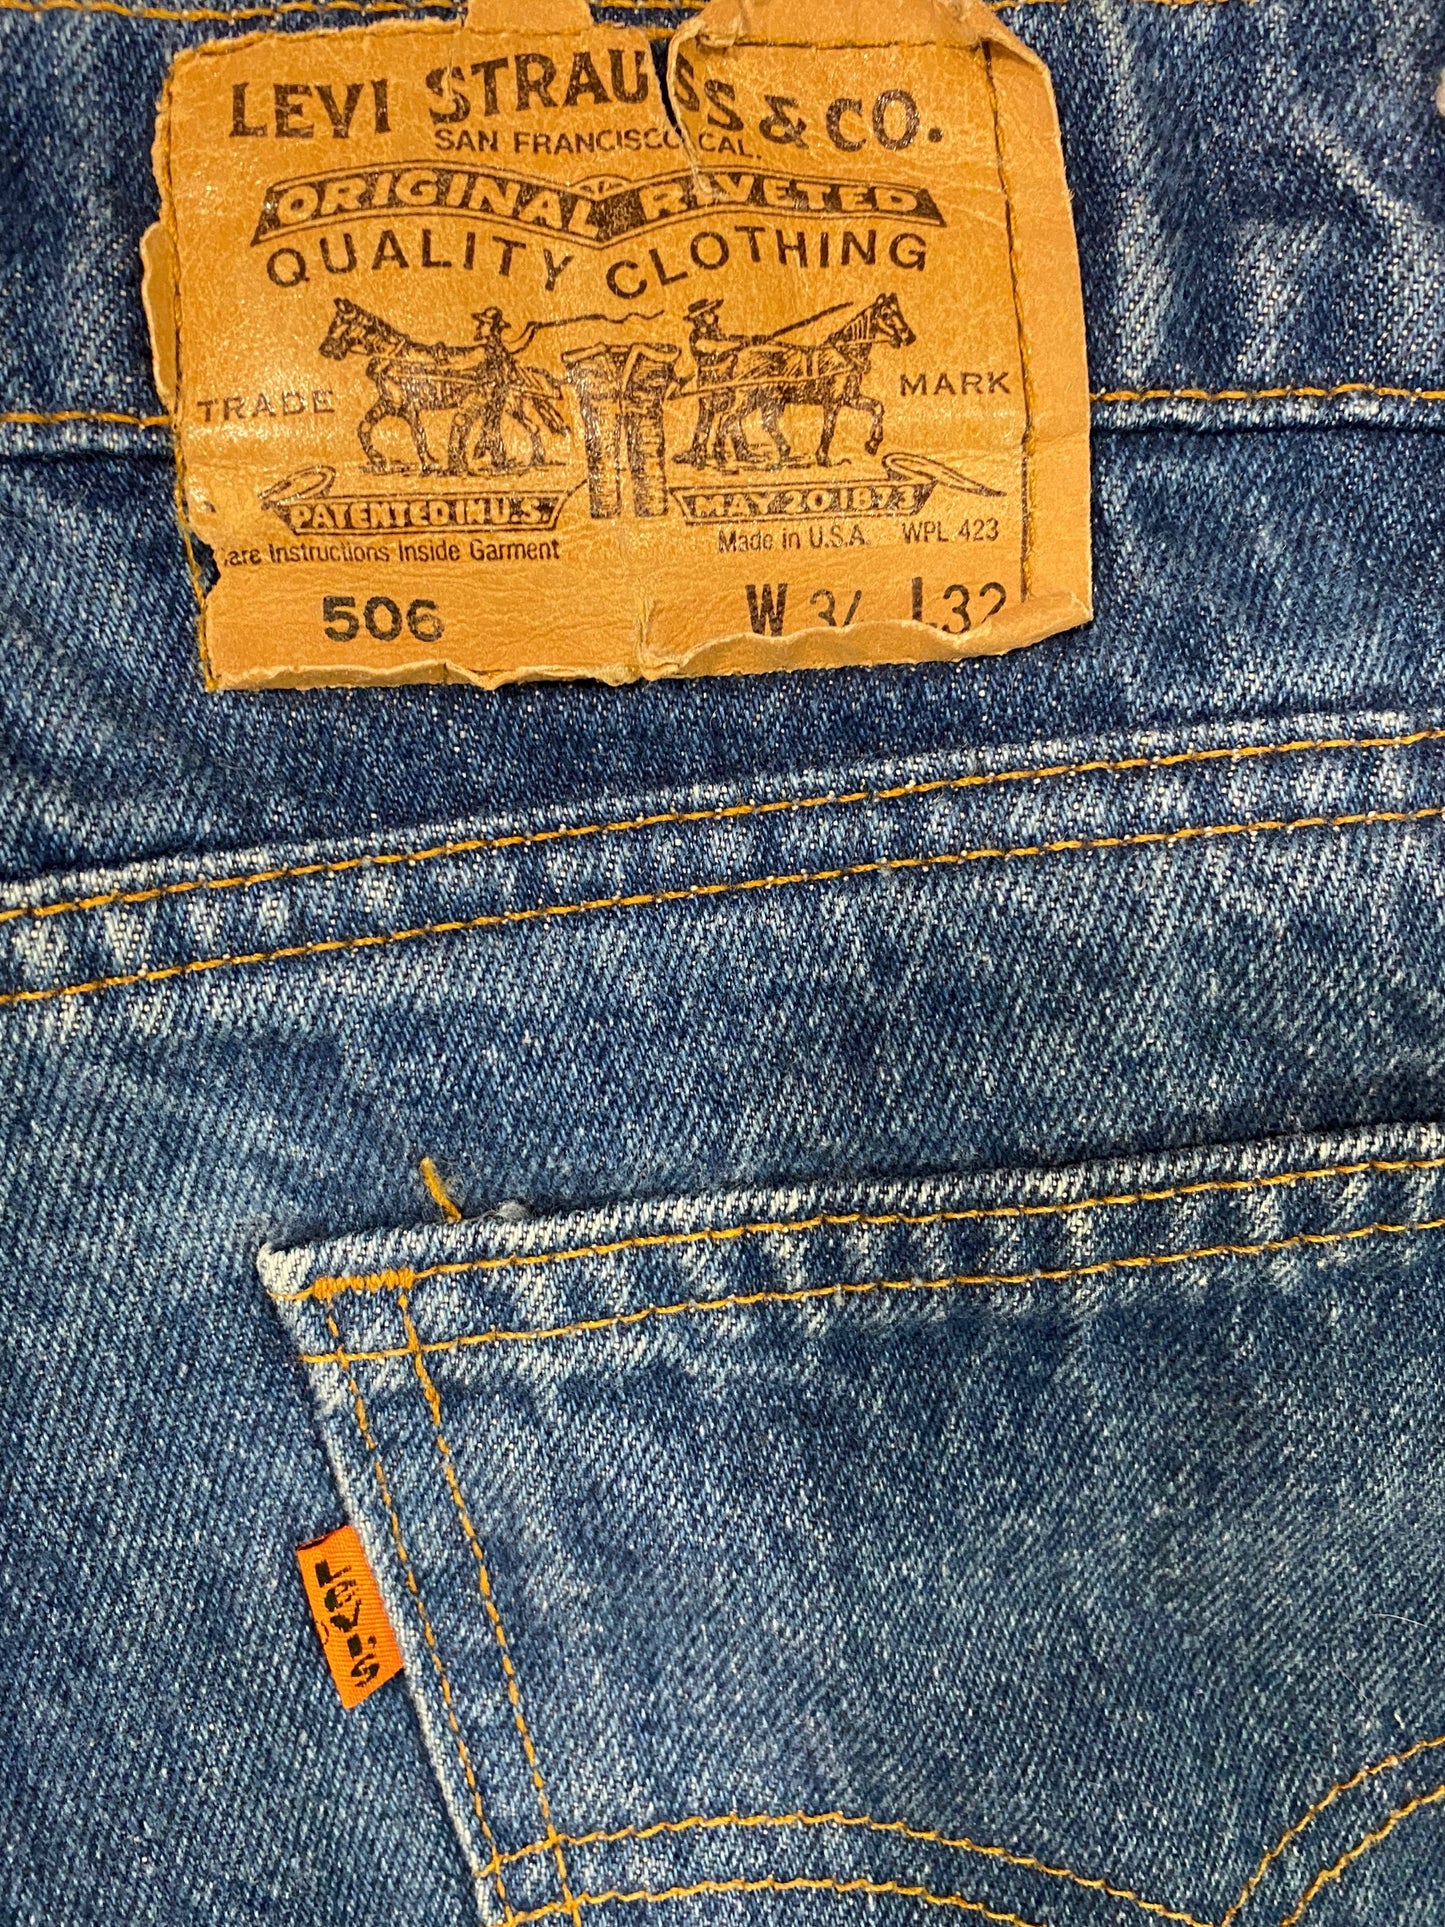 1990s Levis 506 Orange Tab Jeans